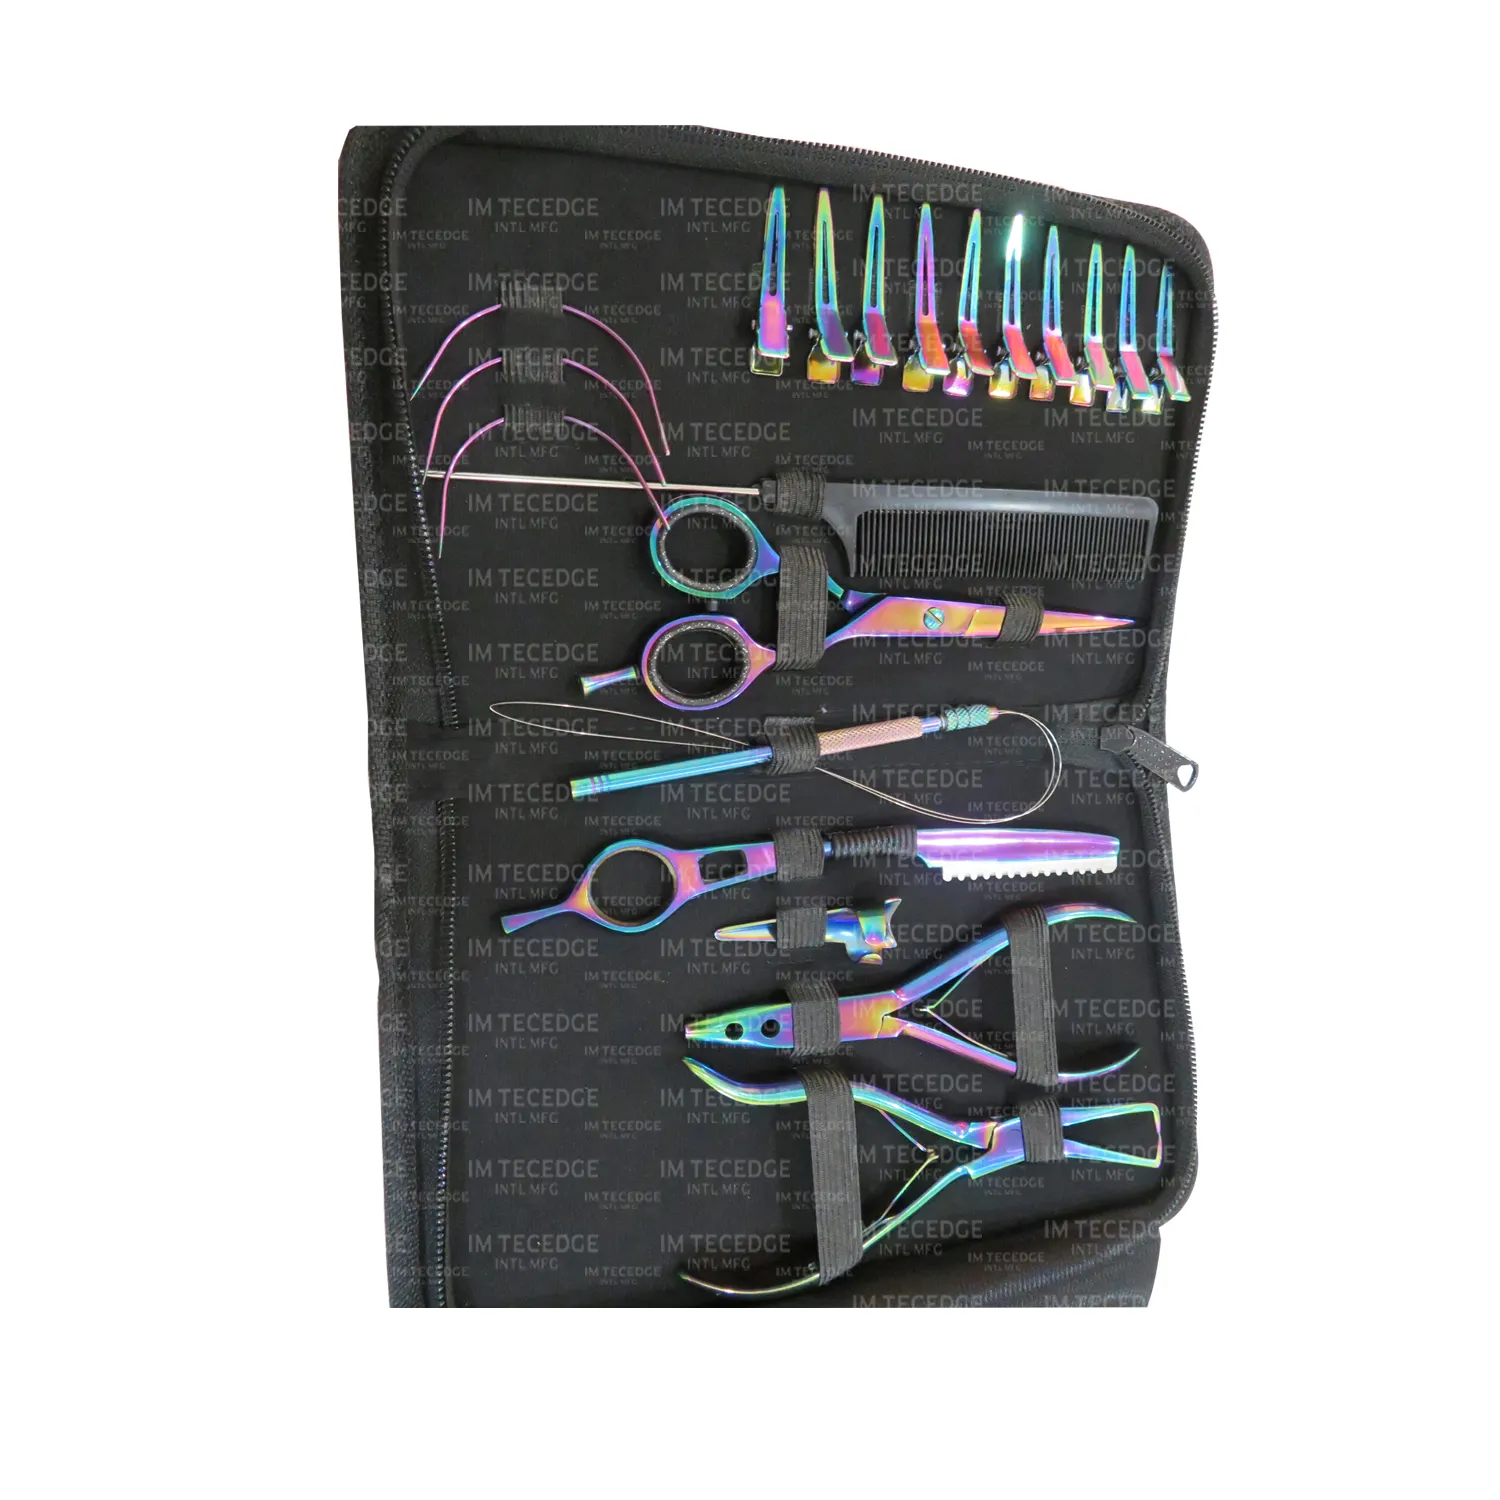 Clip On Hair Extensions Kit Premium Quality Multicolor Machine Plasma Coated Pliers Tools Set